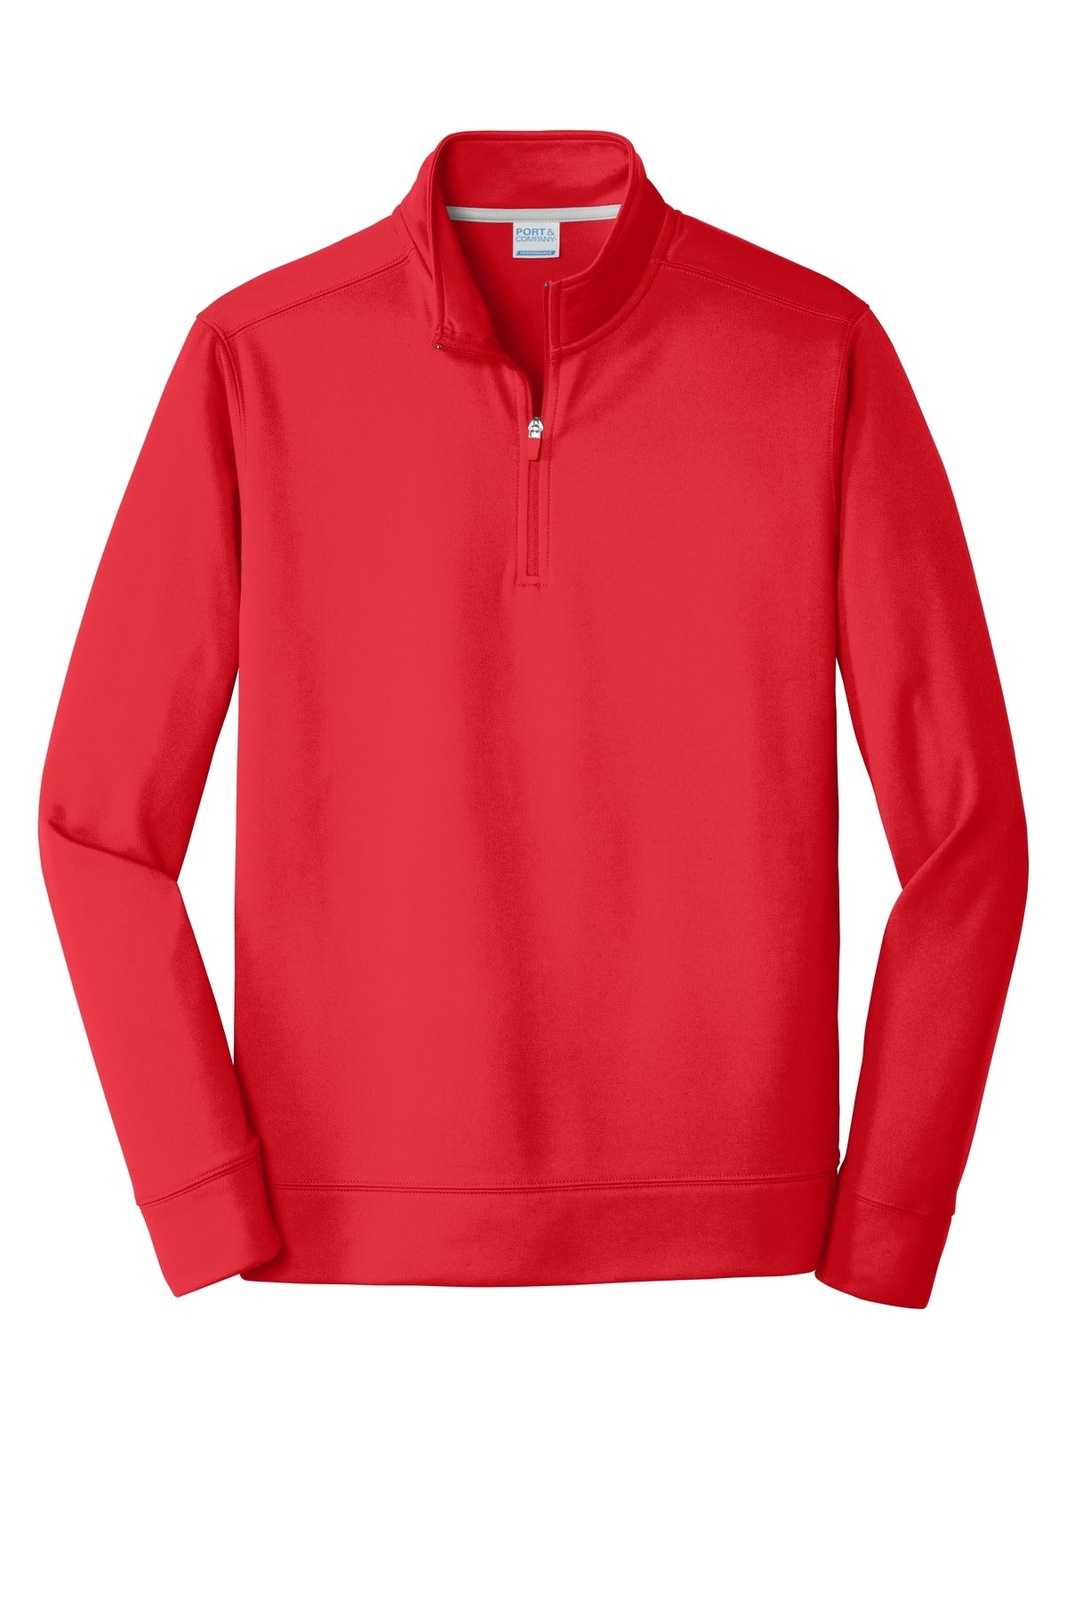 Port &amp; Company PC590Q Fleece 1/4-Zip Pullover Sweatshirt - Red - HIT a Double - 5